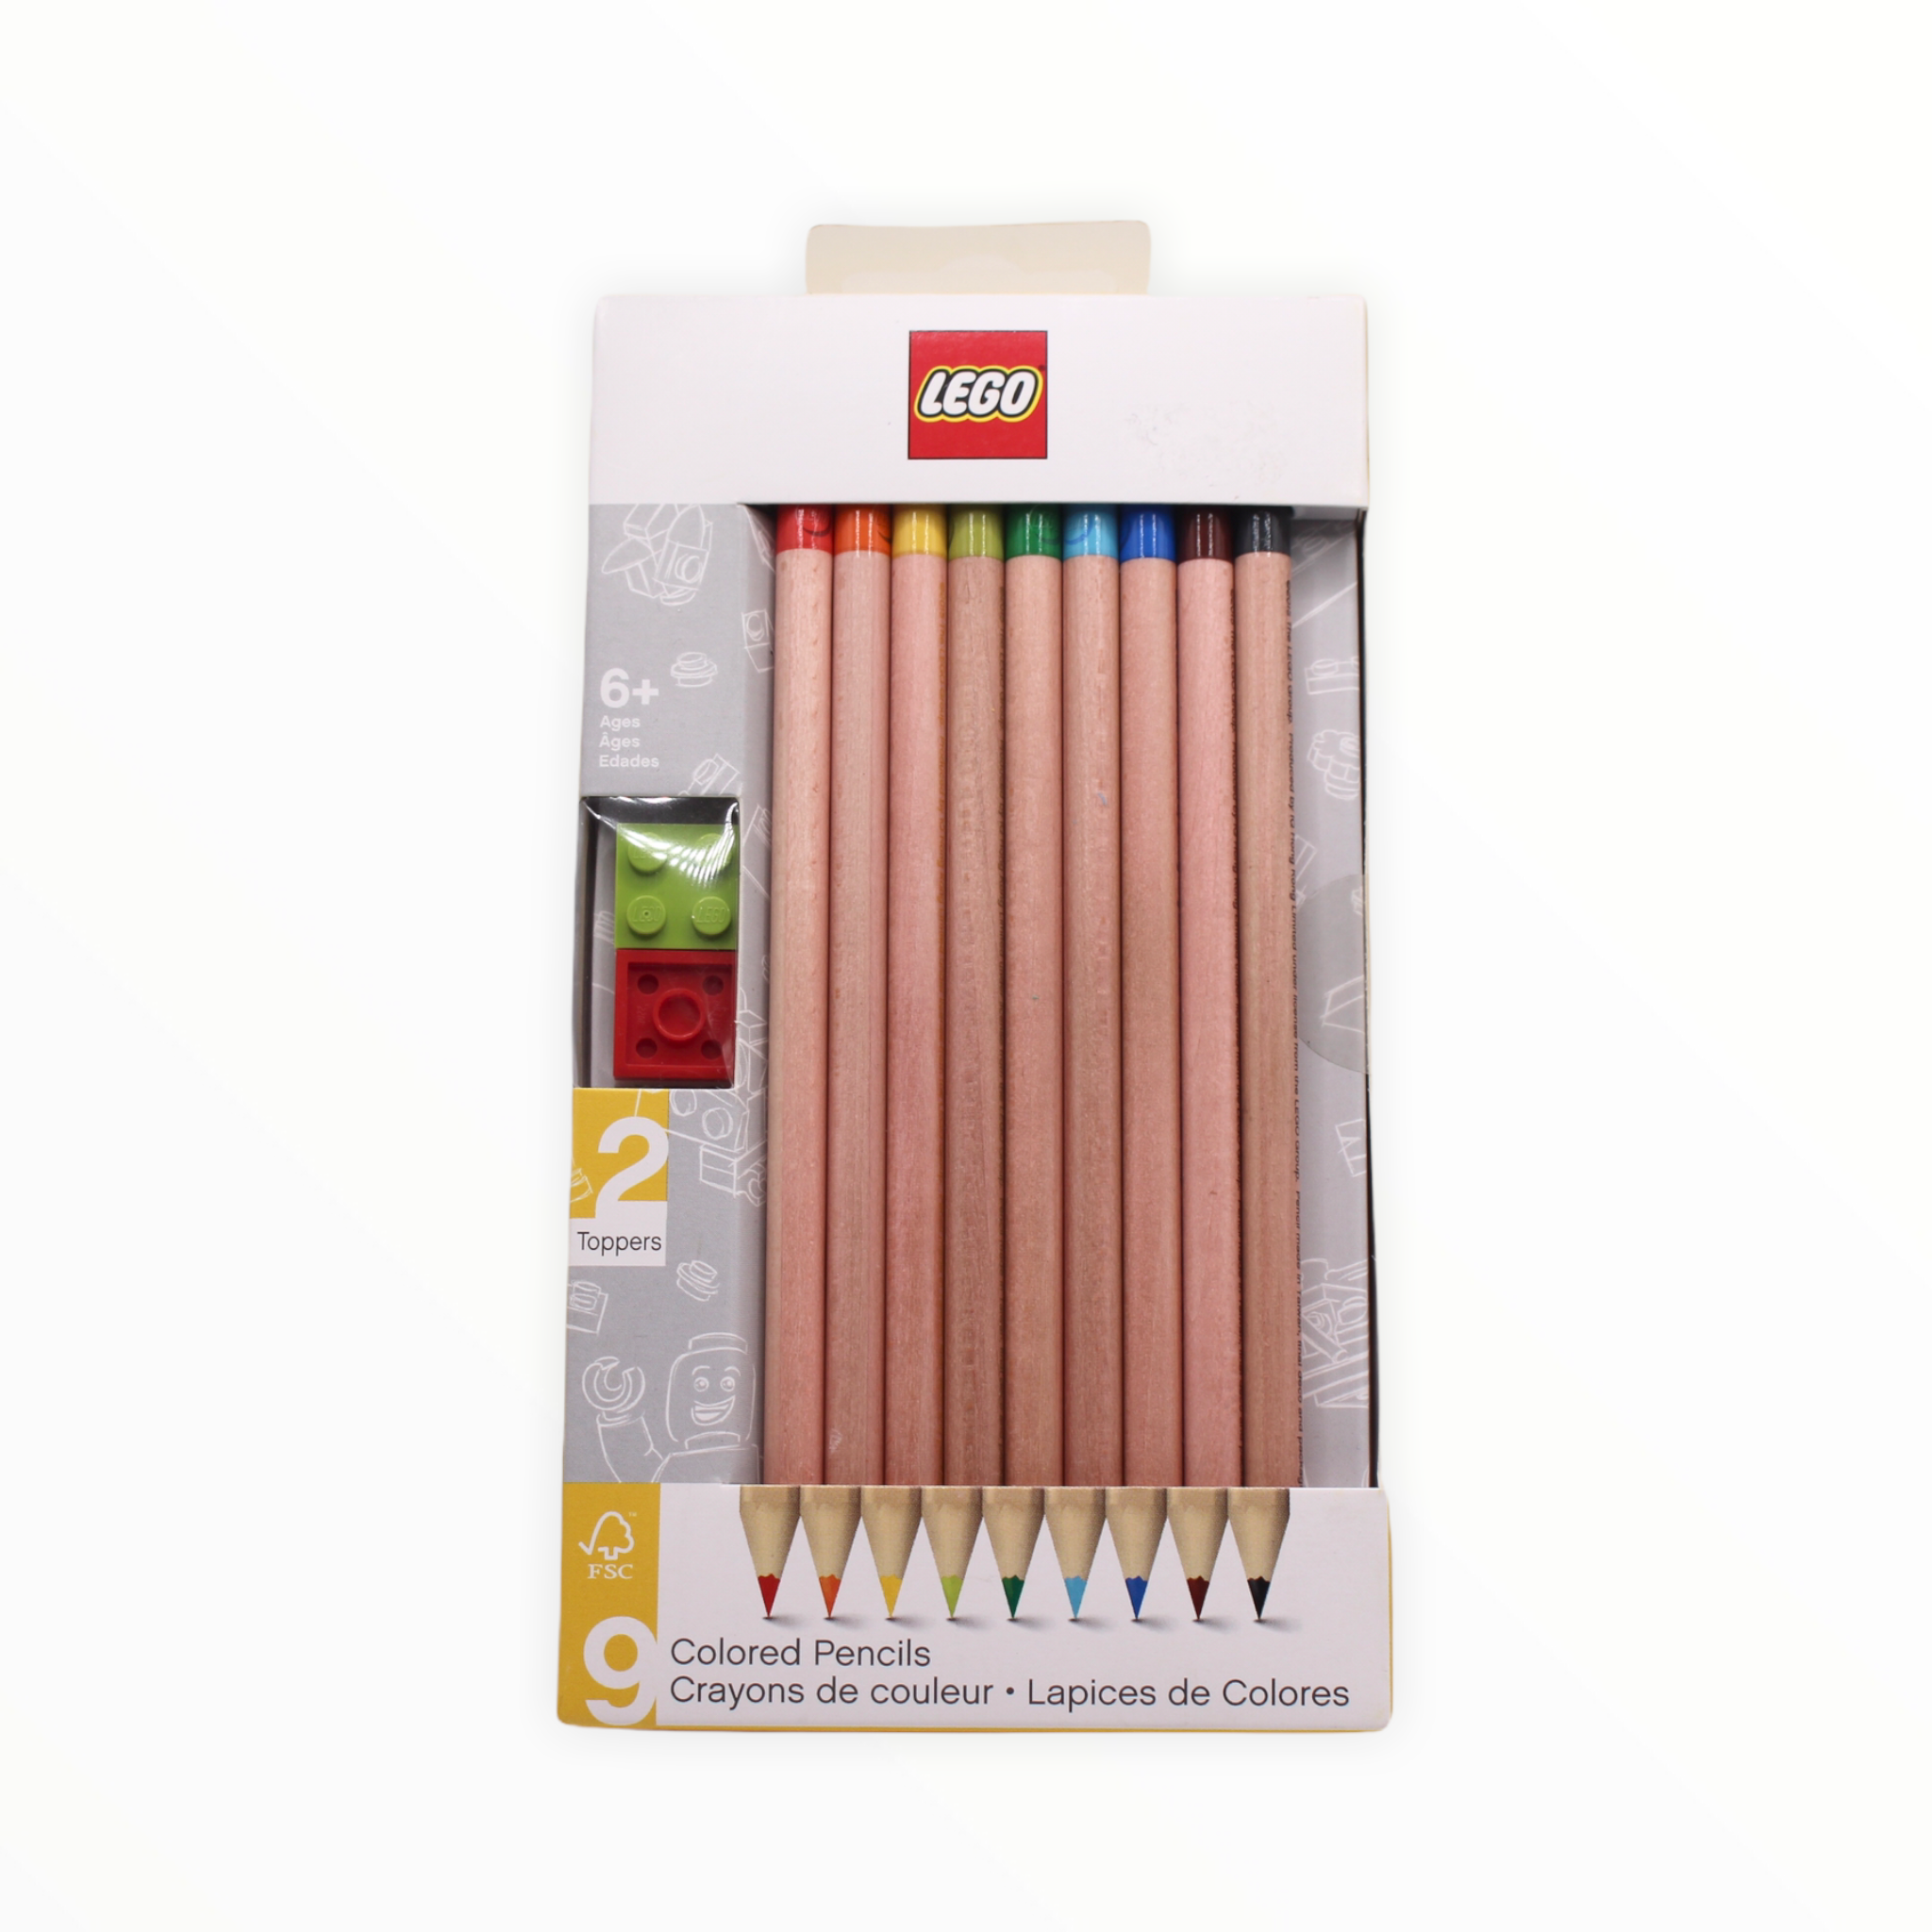 LEGO Colored Pencils